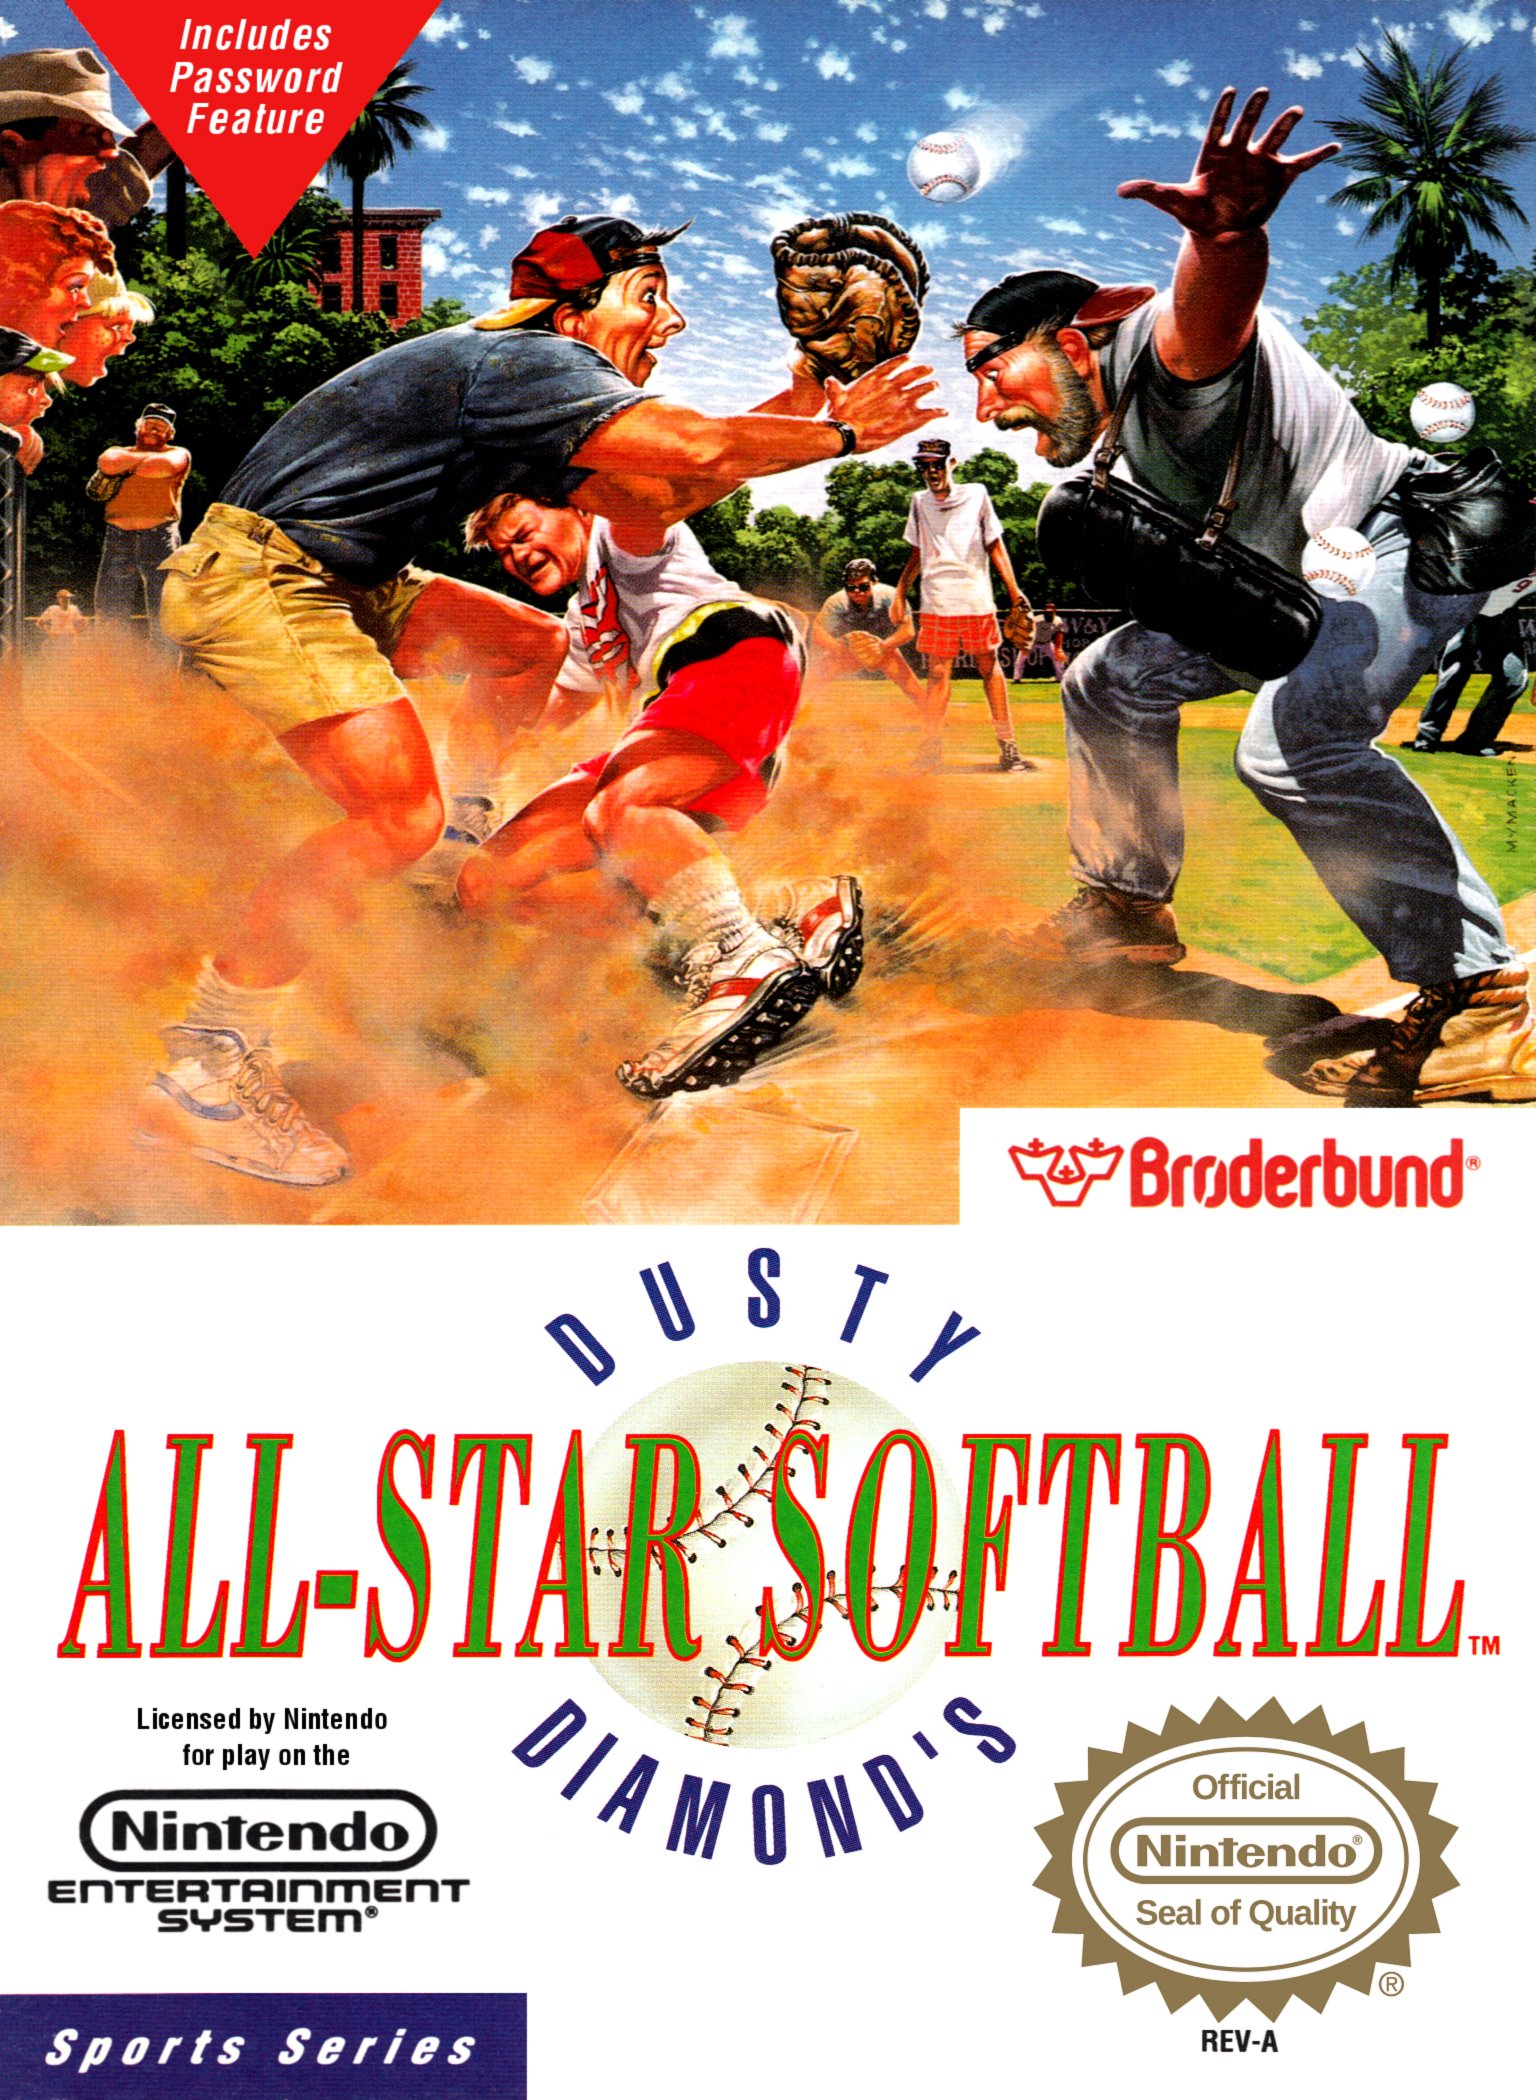 Image of Dusty Diamond's All-Star Softball